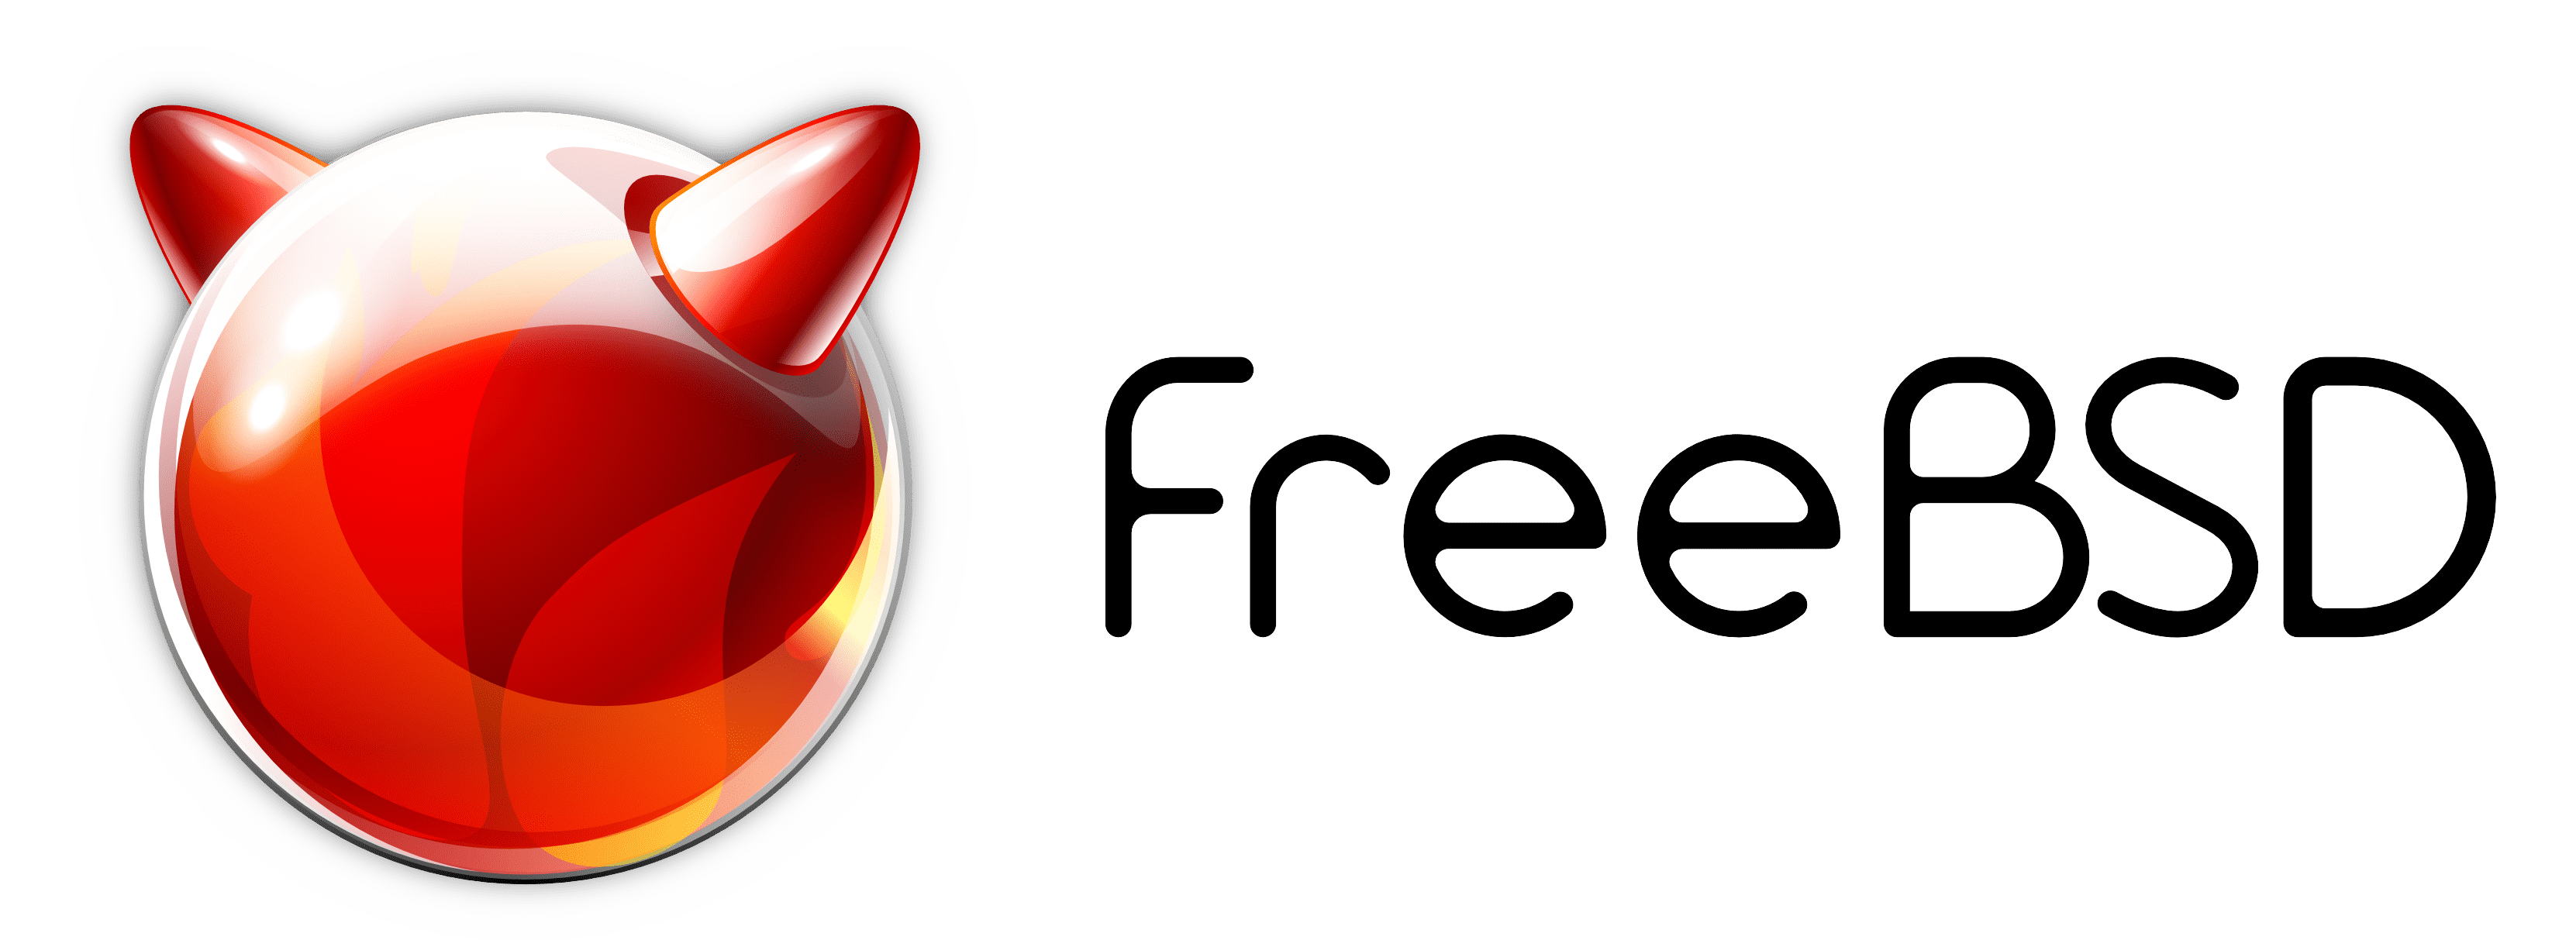 freebsd-logo-1